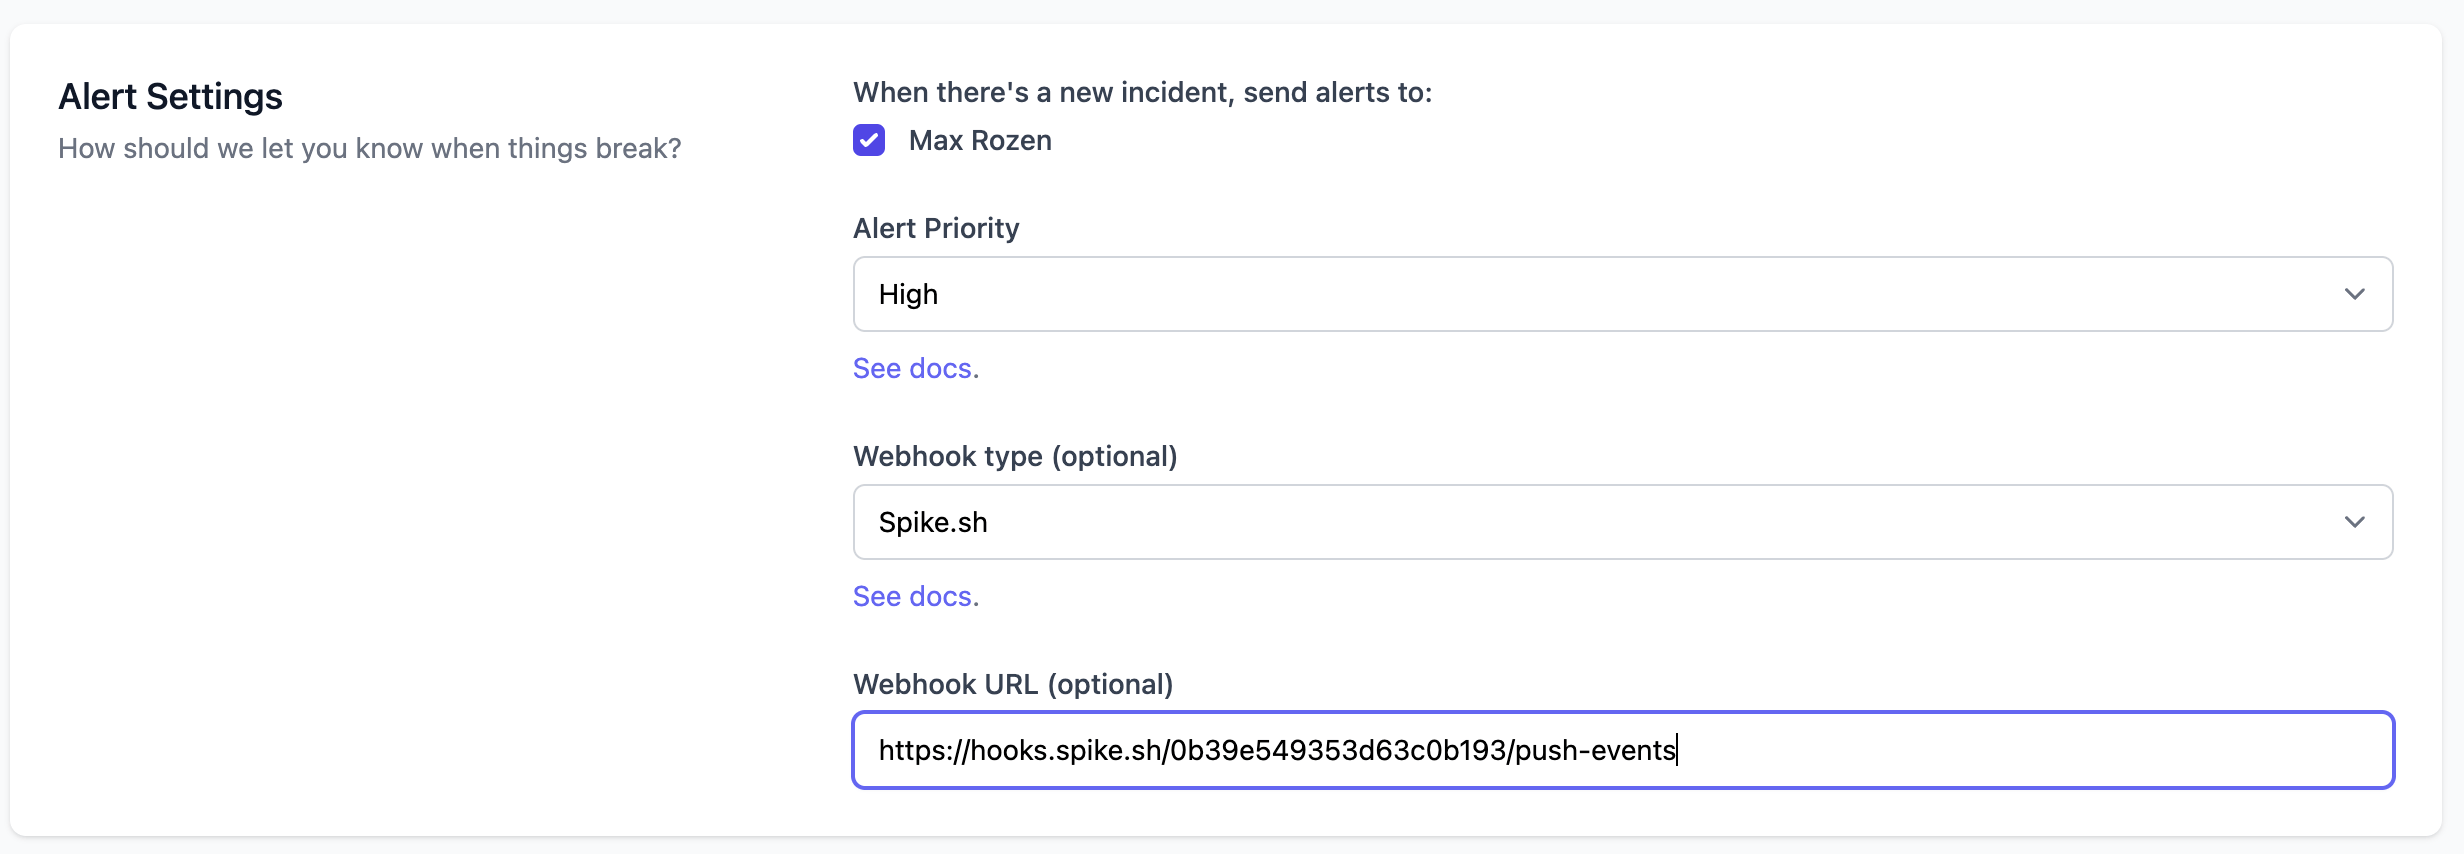 OnlineOrNot Webhooks URL for Spike